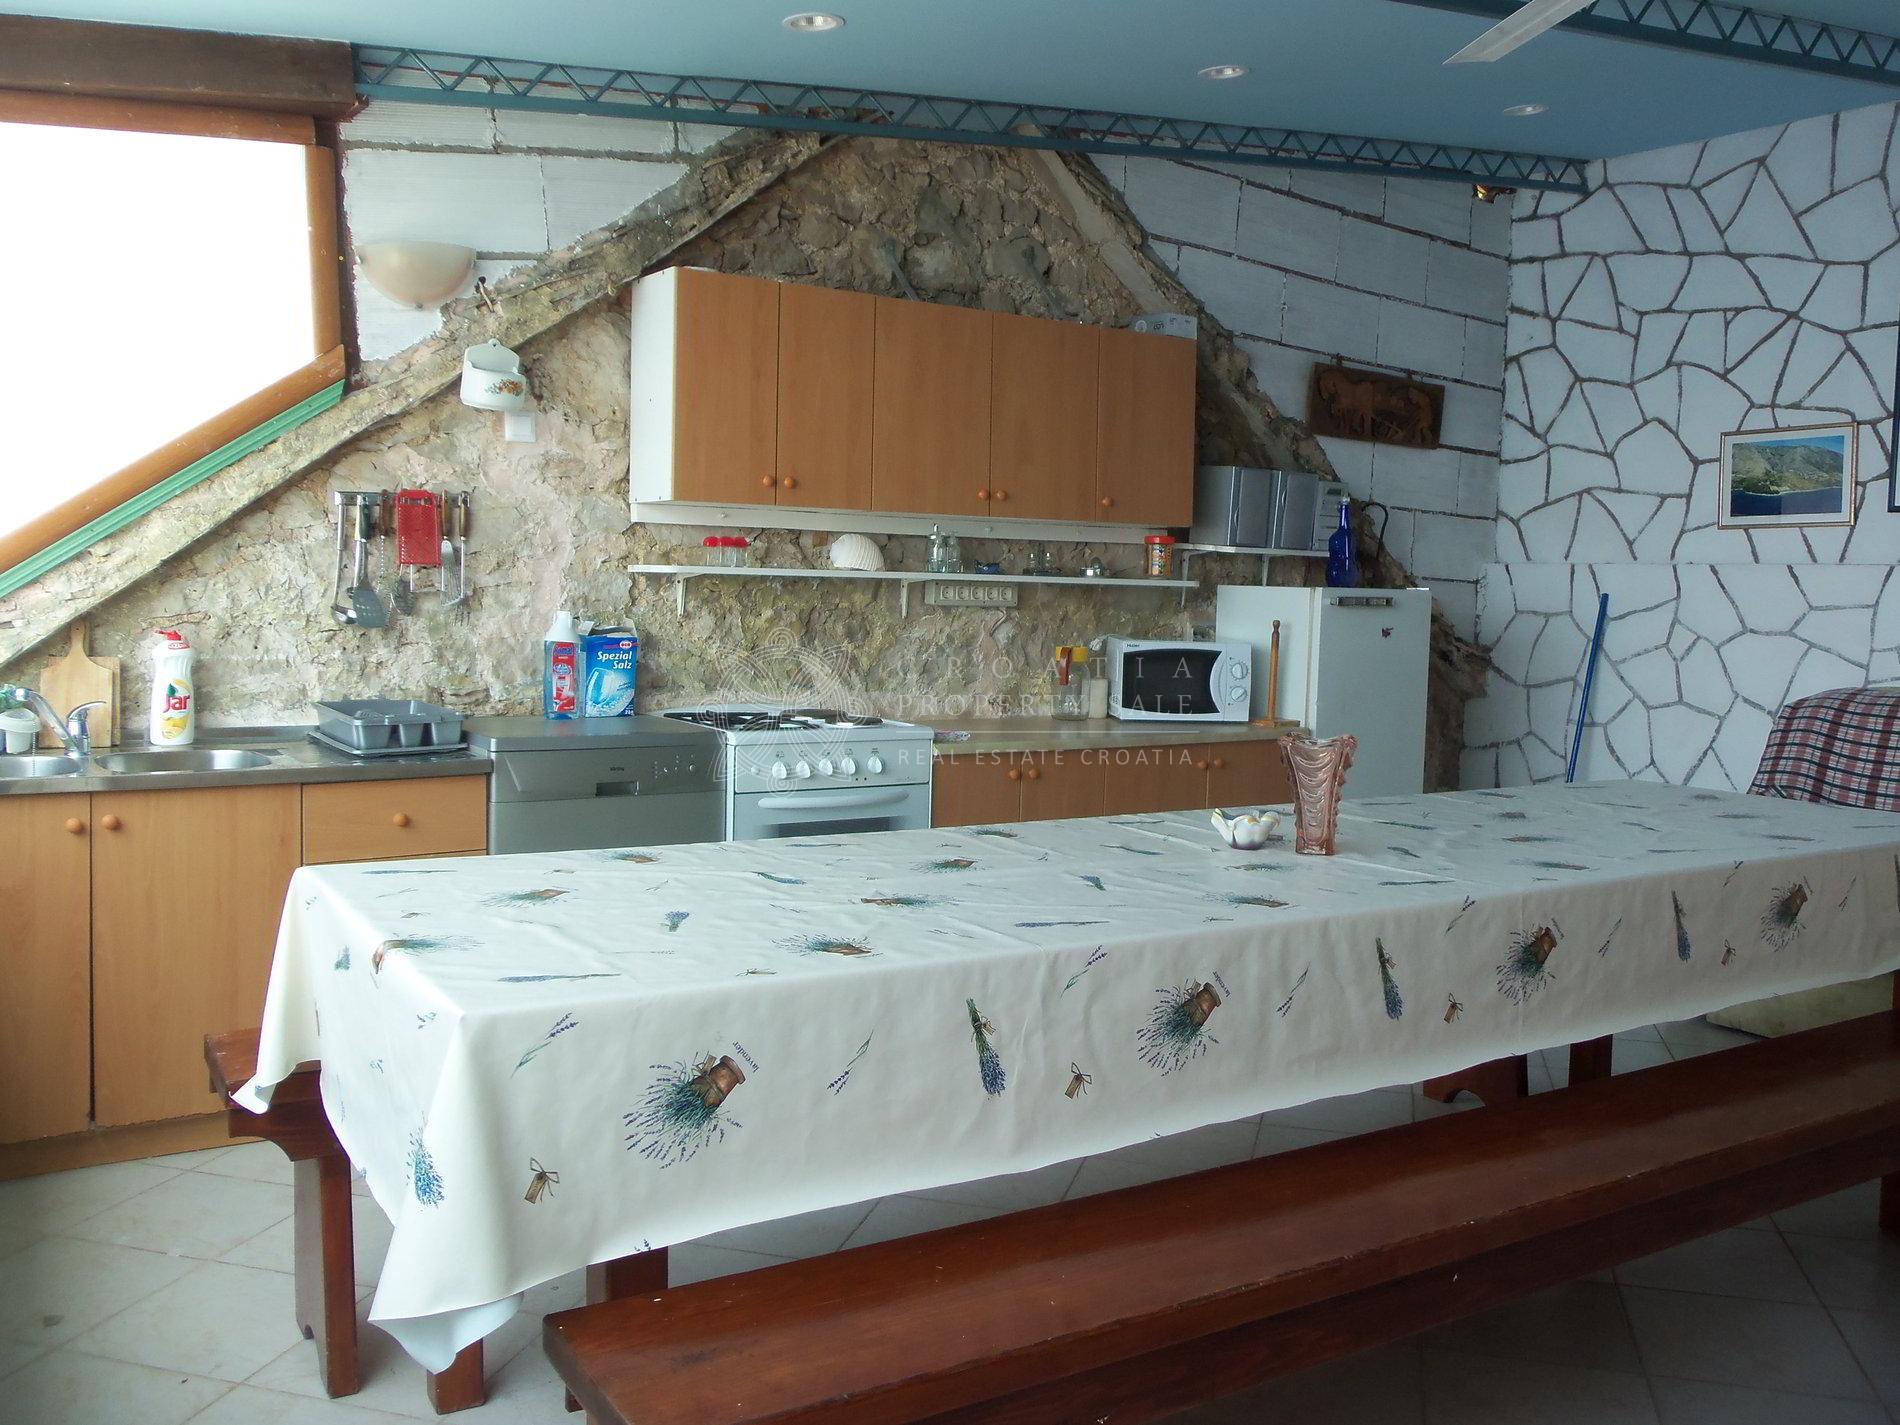 Croatia Brac island sea view house for sale